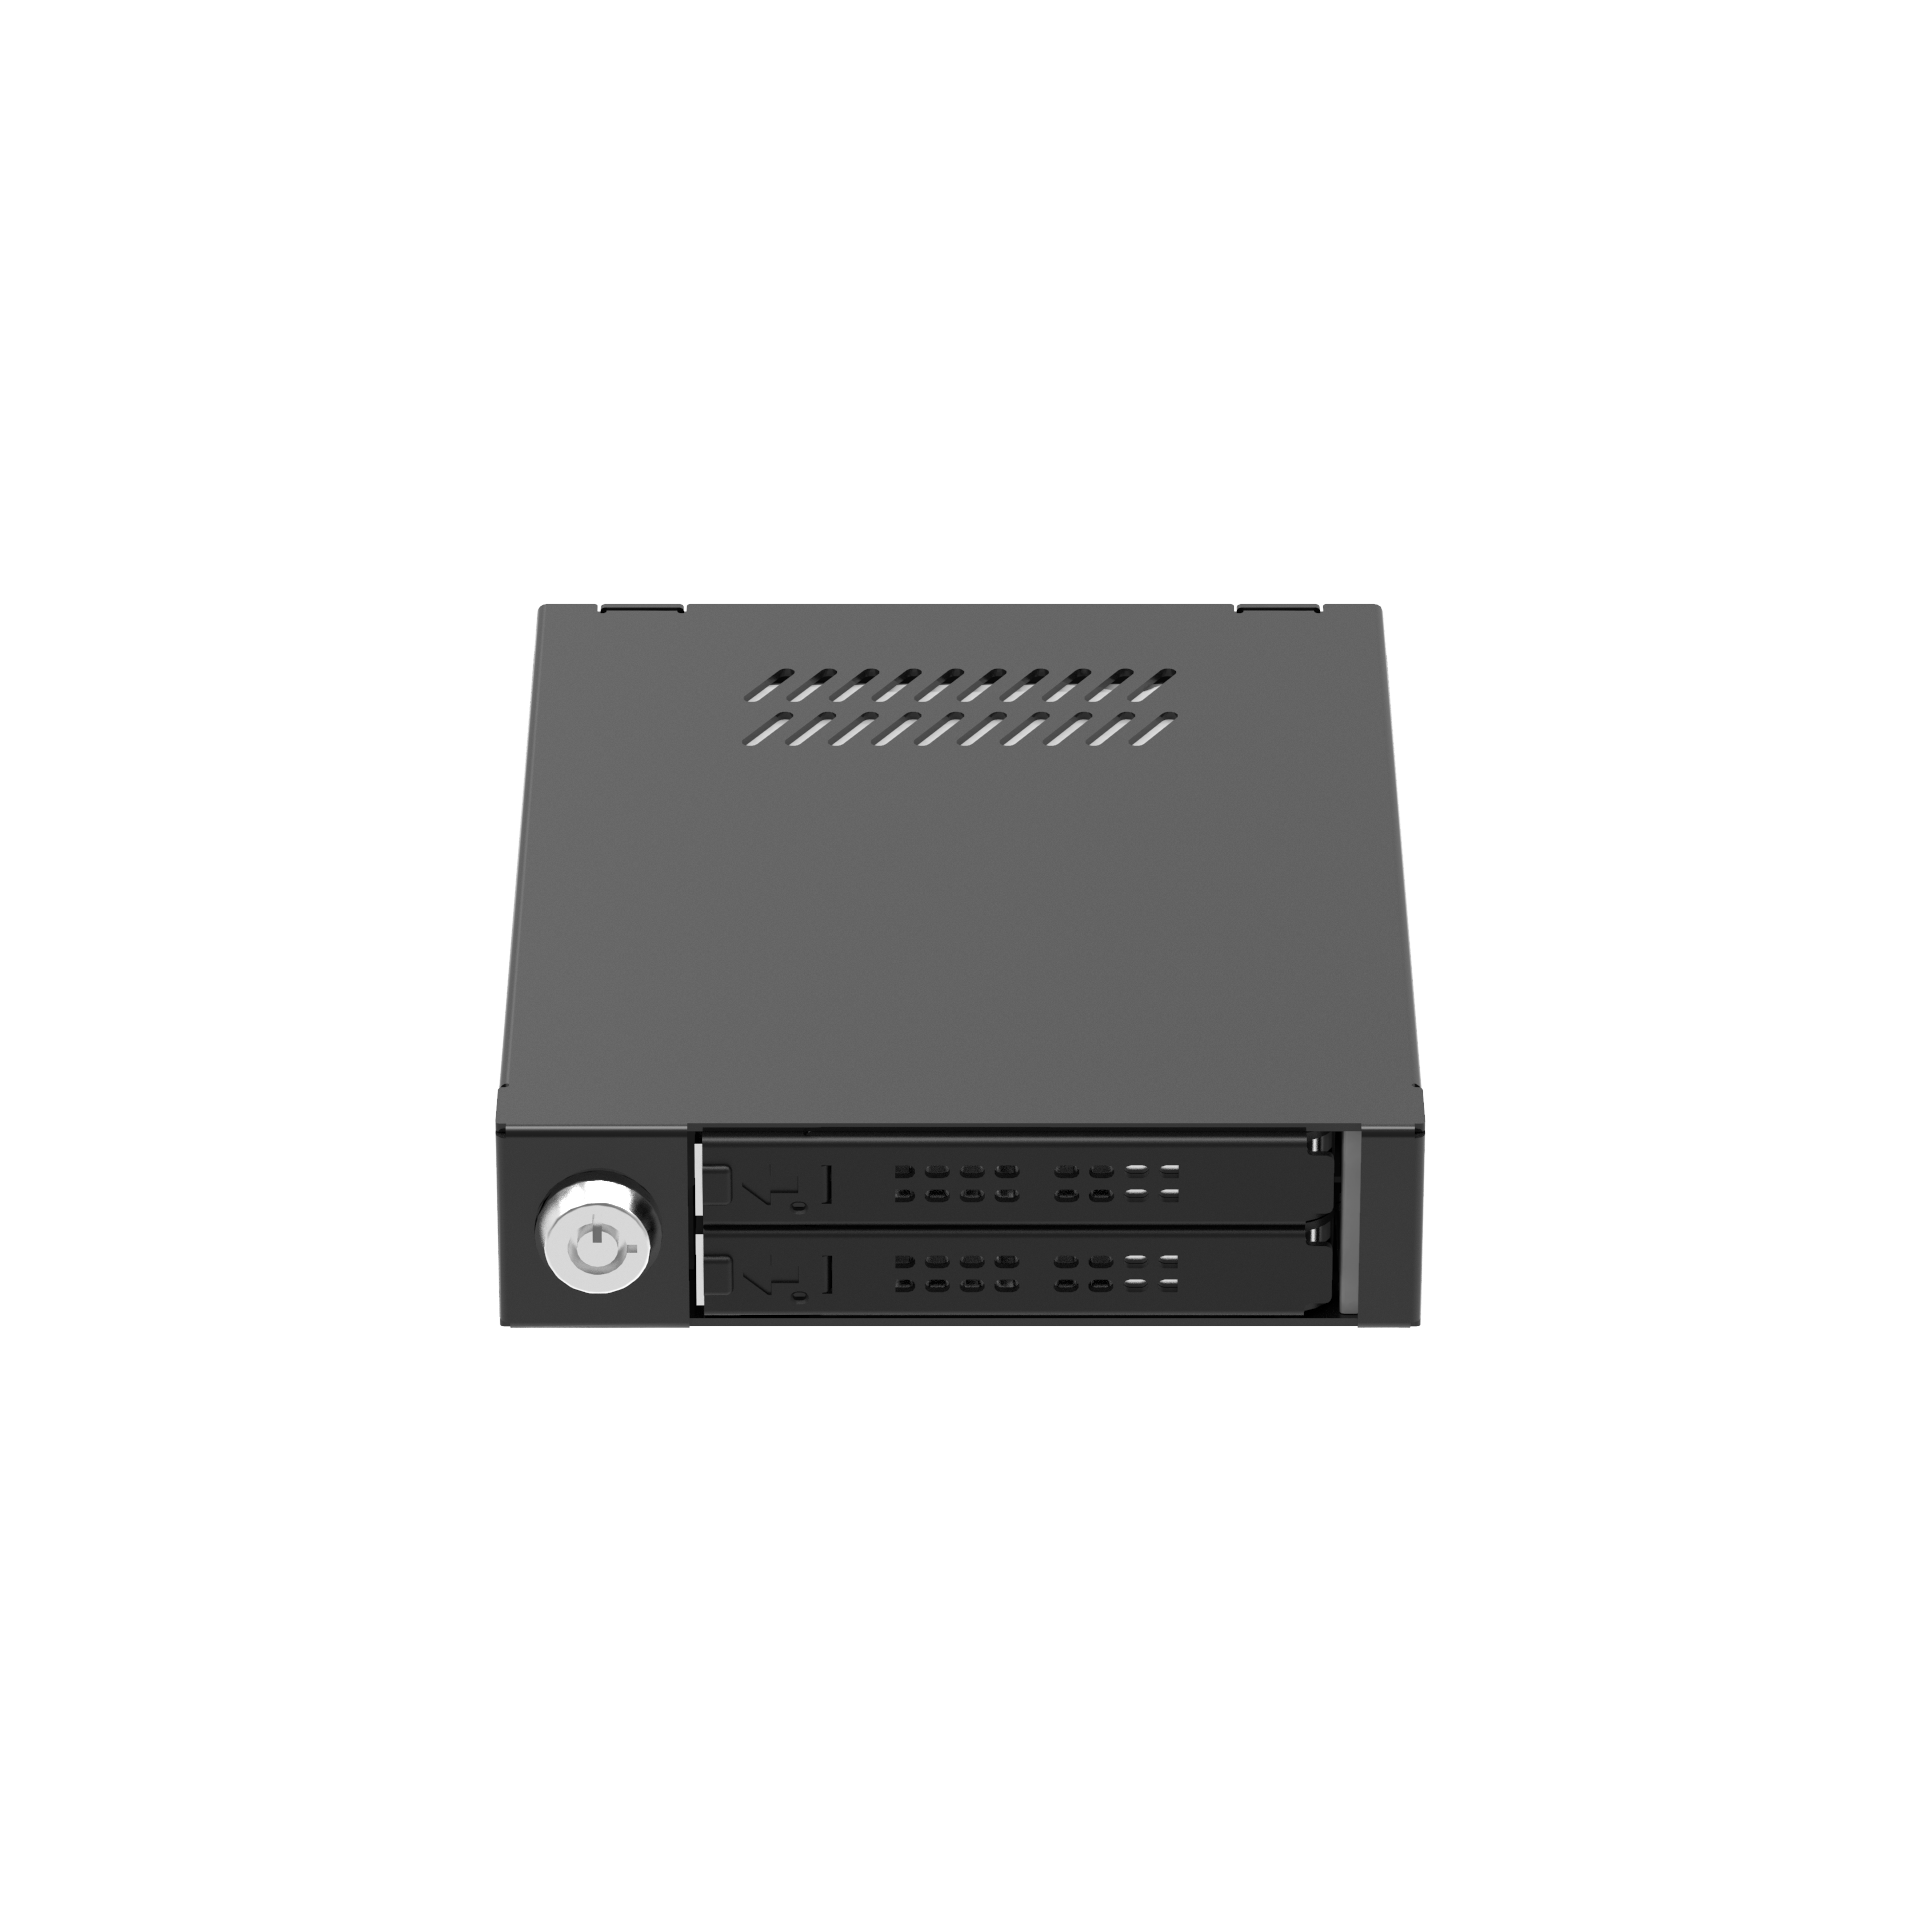 Unestech 2盘软驱位2.5寸U.2 / U.3 NVME SSD硬盘抽取盒